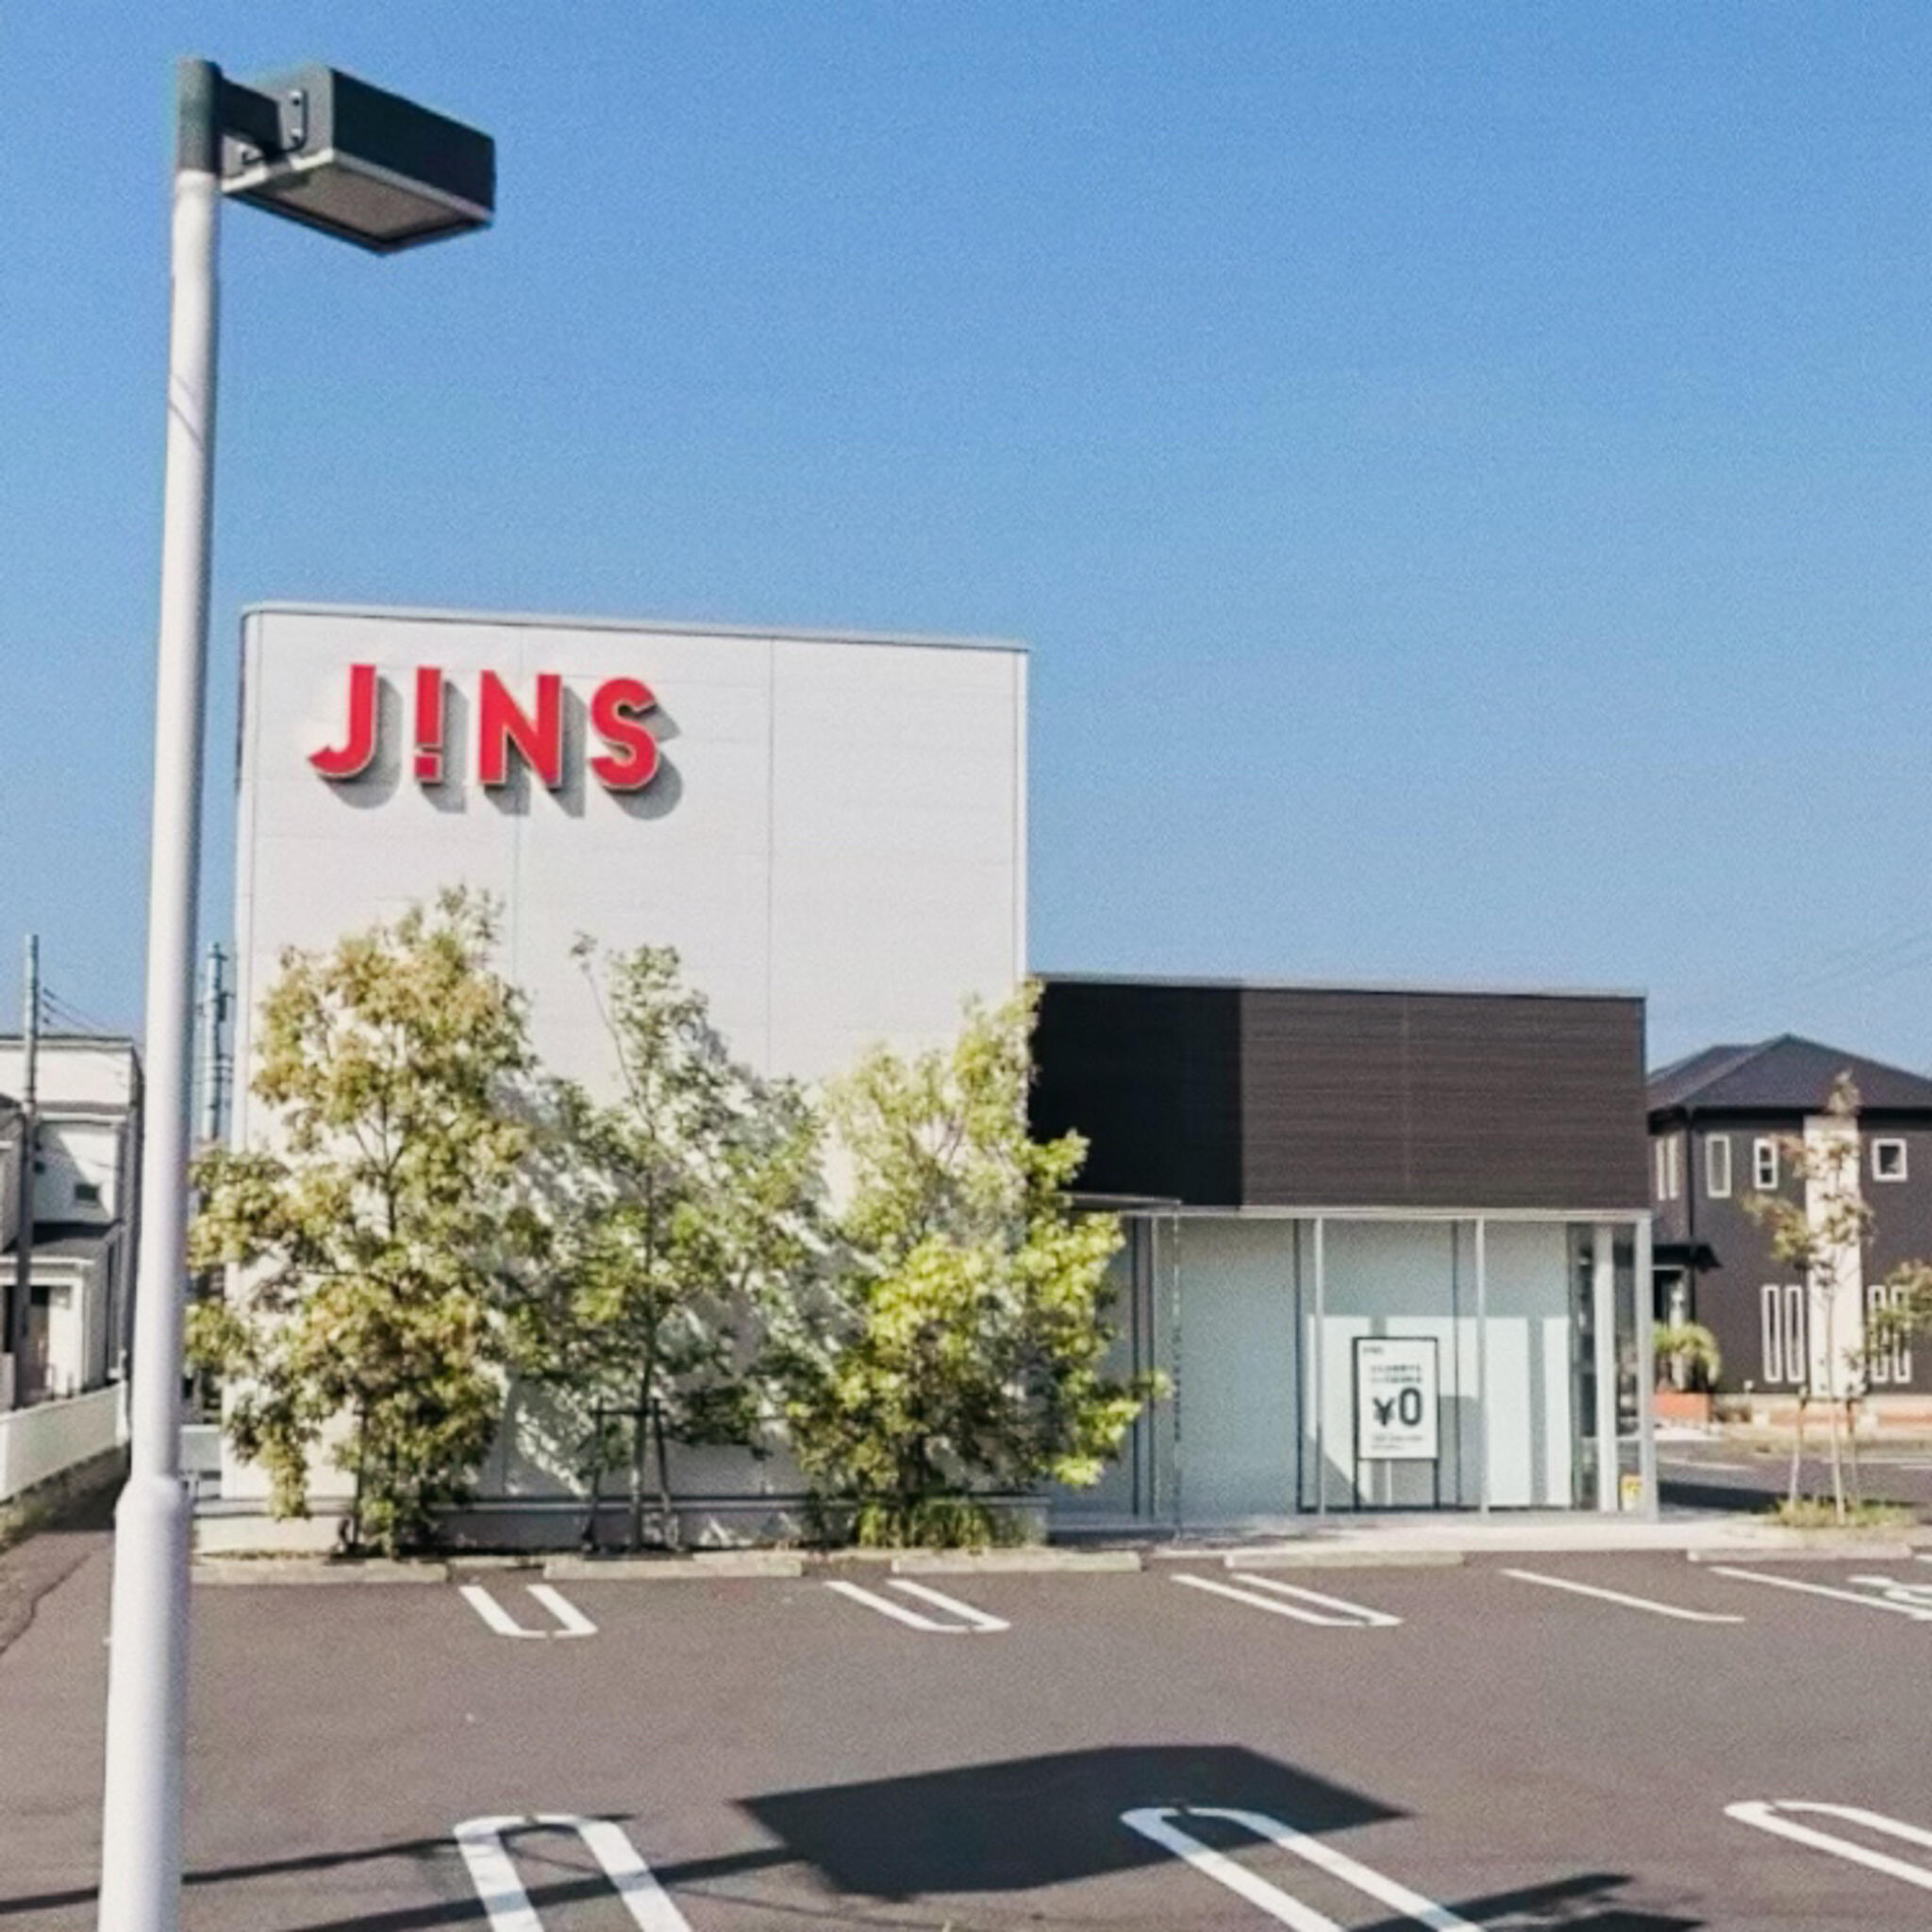 JINS 佐倉店の代表写真1